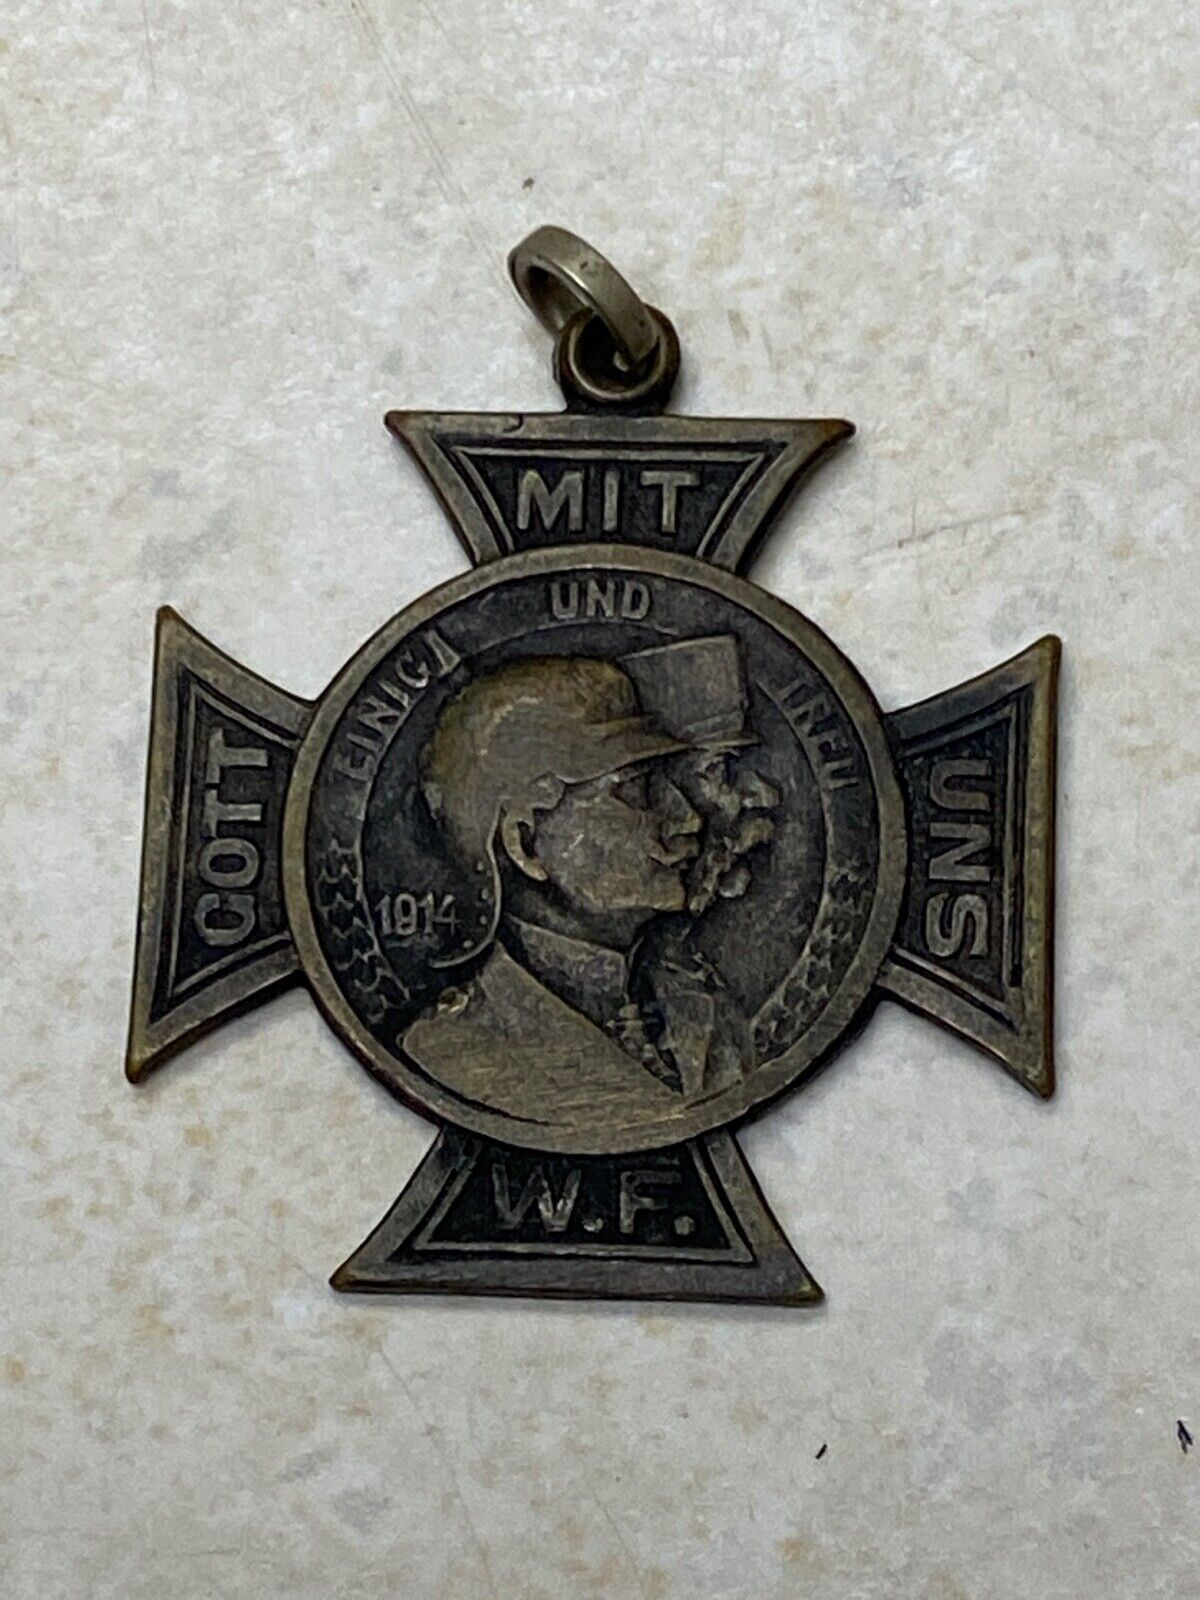 1914 German Got Mit Uns Cross Medal